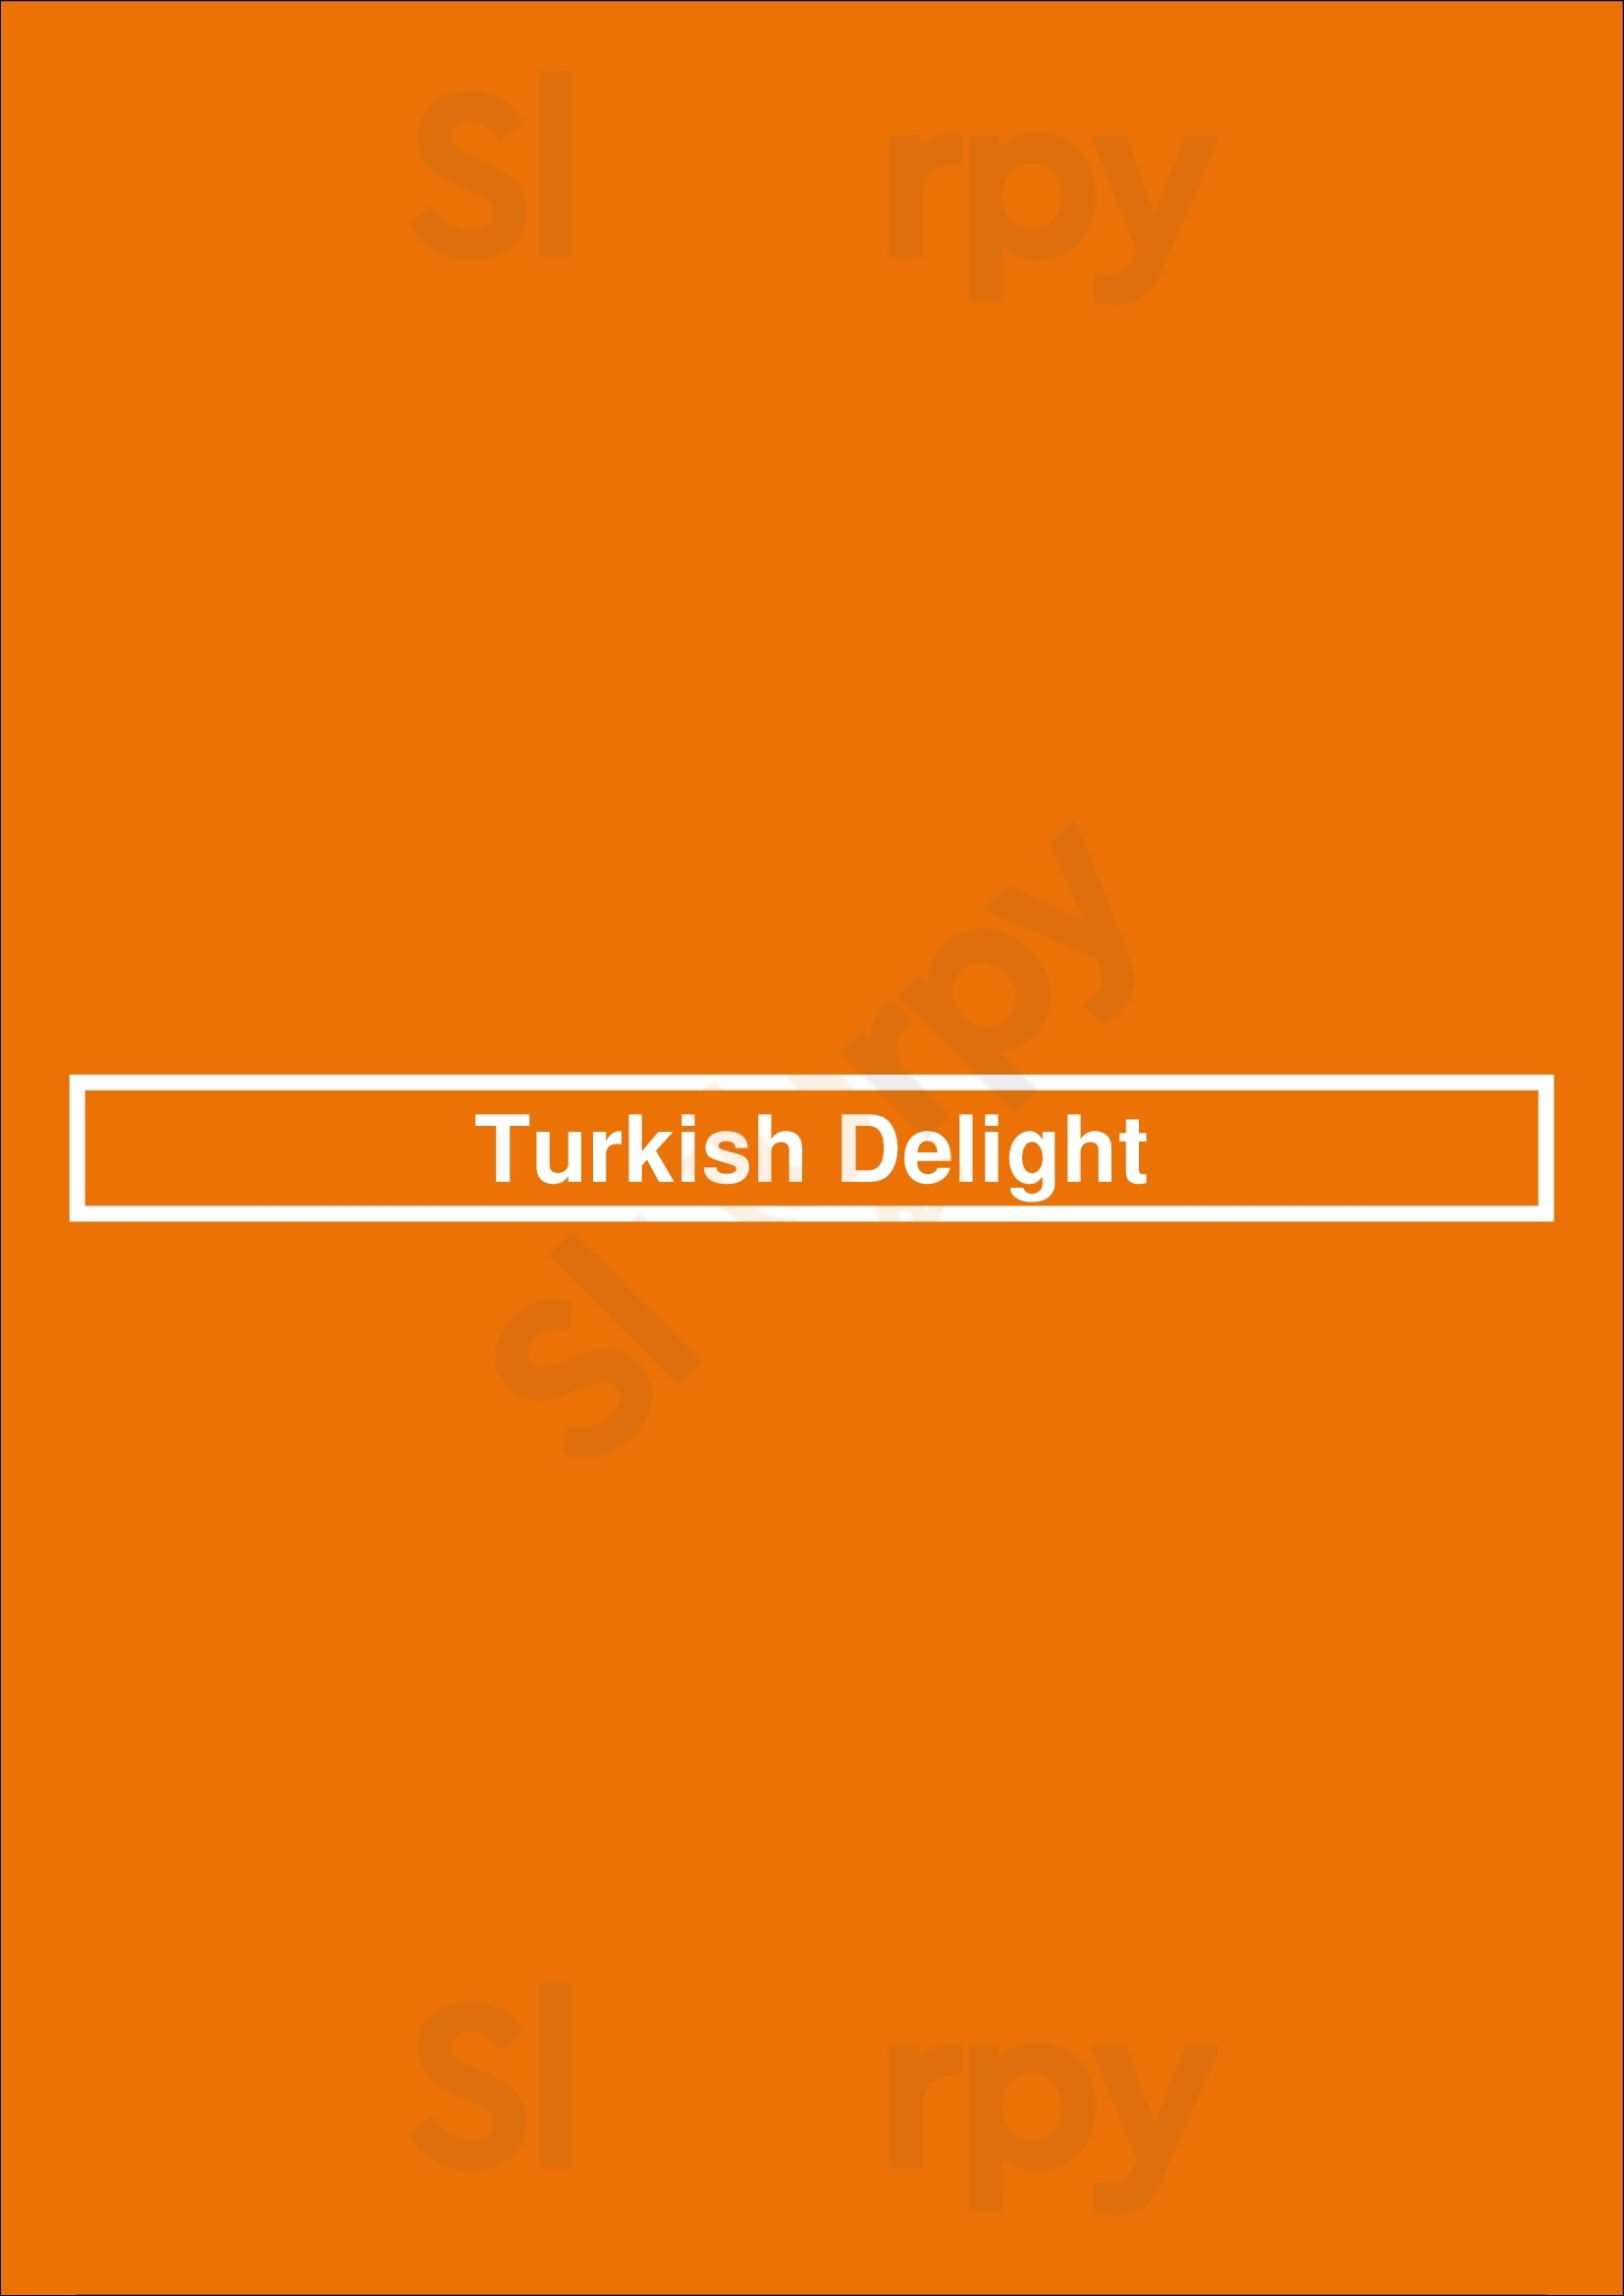 Turkish Delight Dover Menu - 1